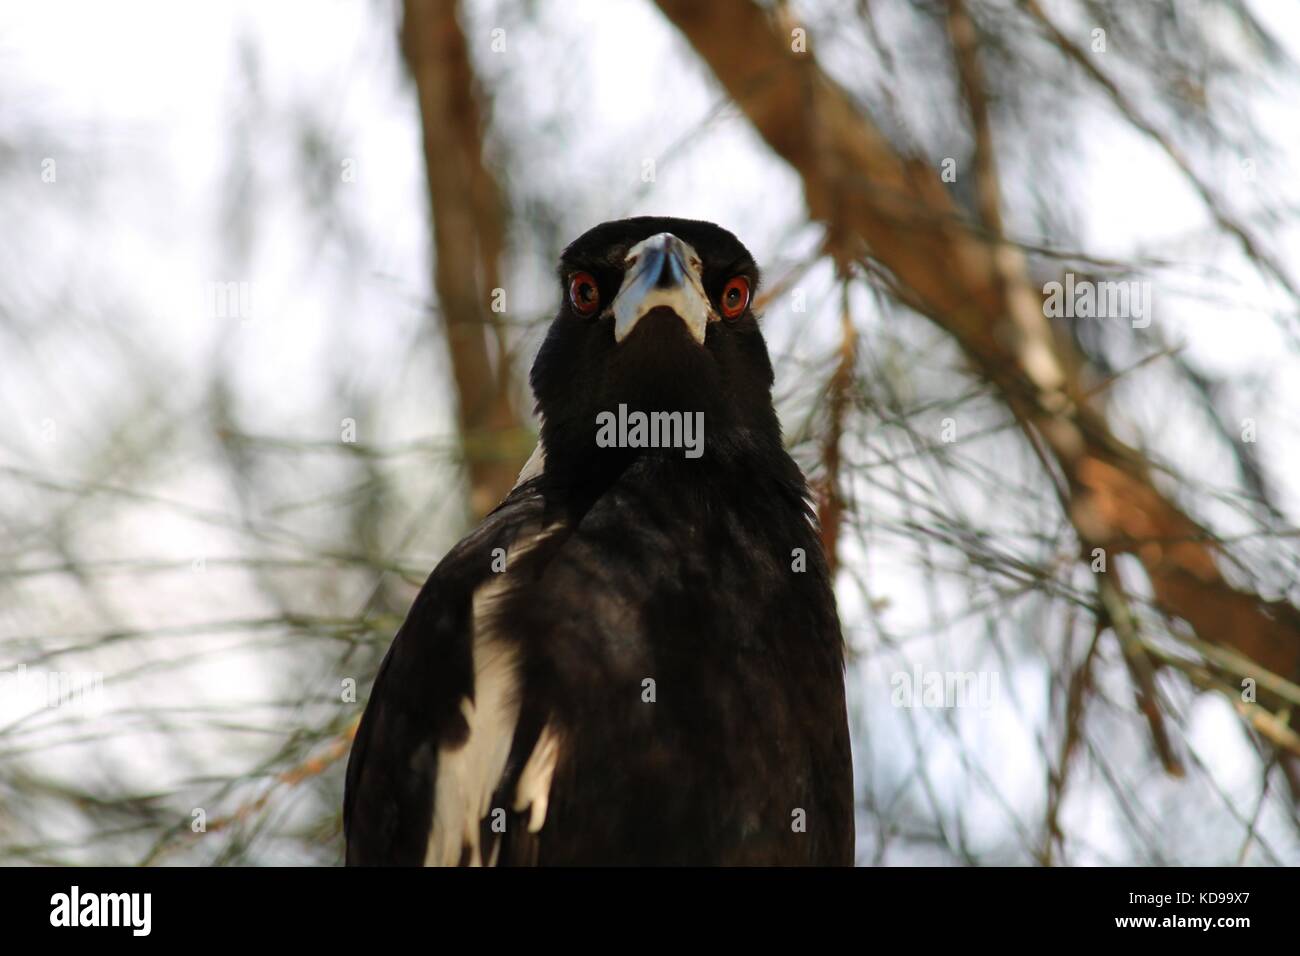 Australian magpie, black bird Stock Photo